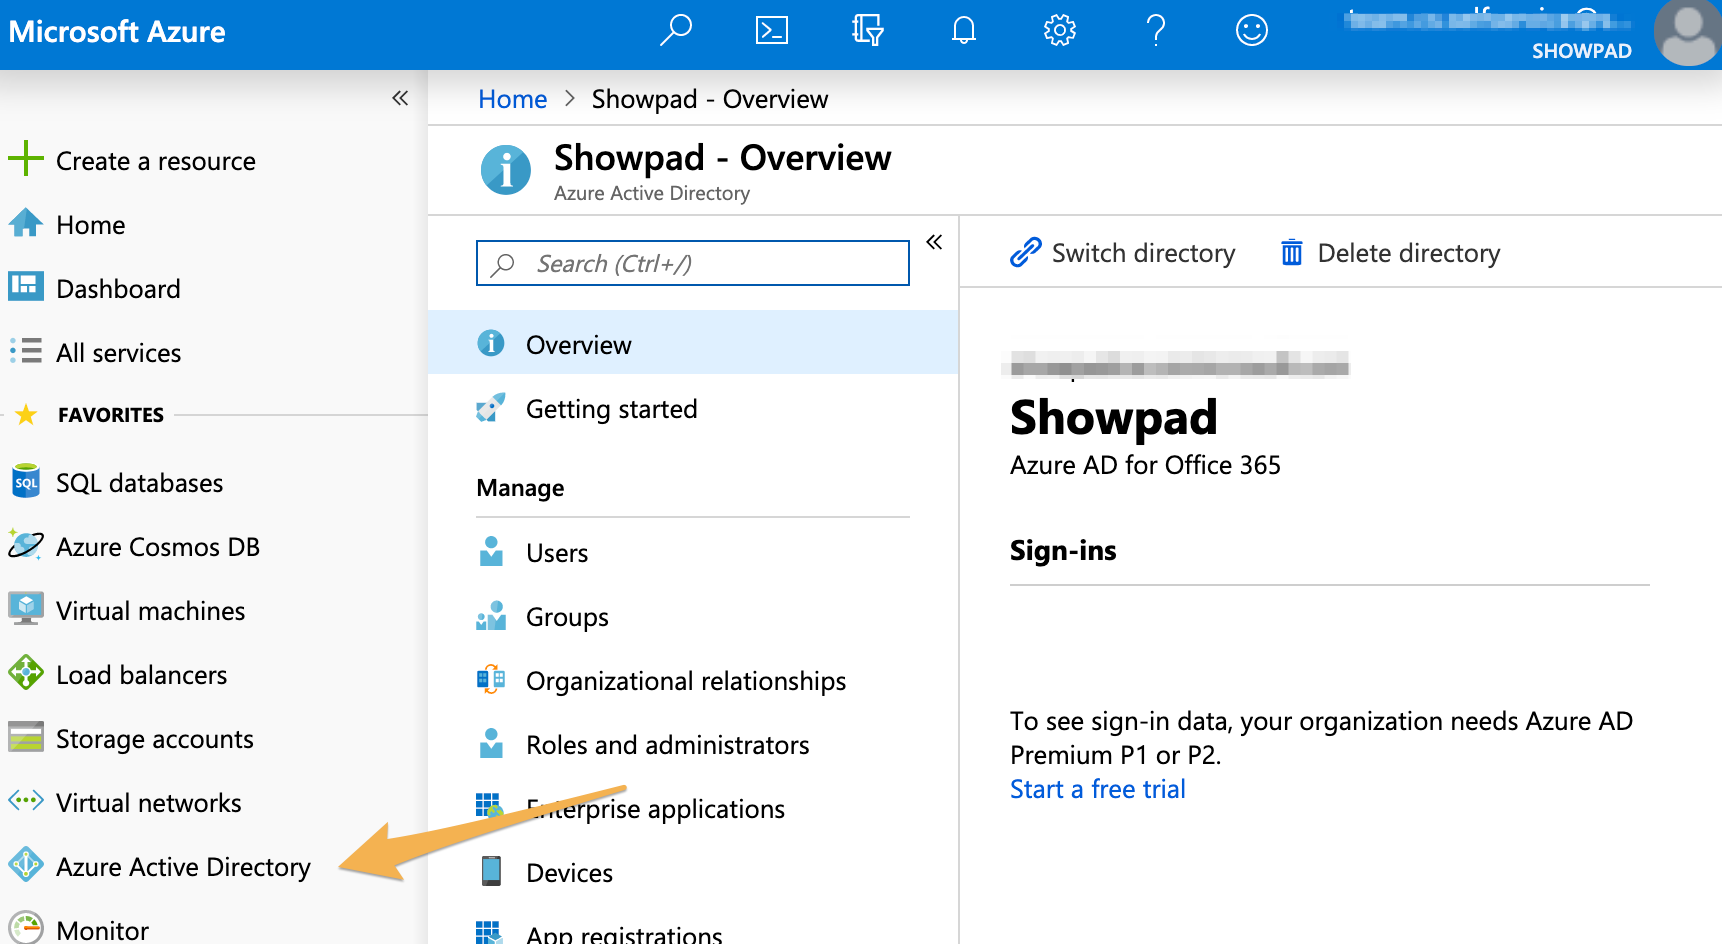 Showpad_-_Overview_-_Microsoft_Azure.png